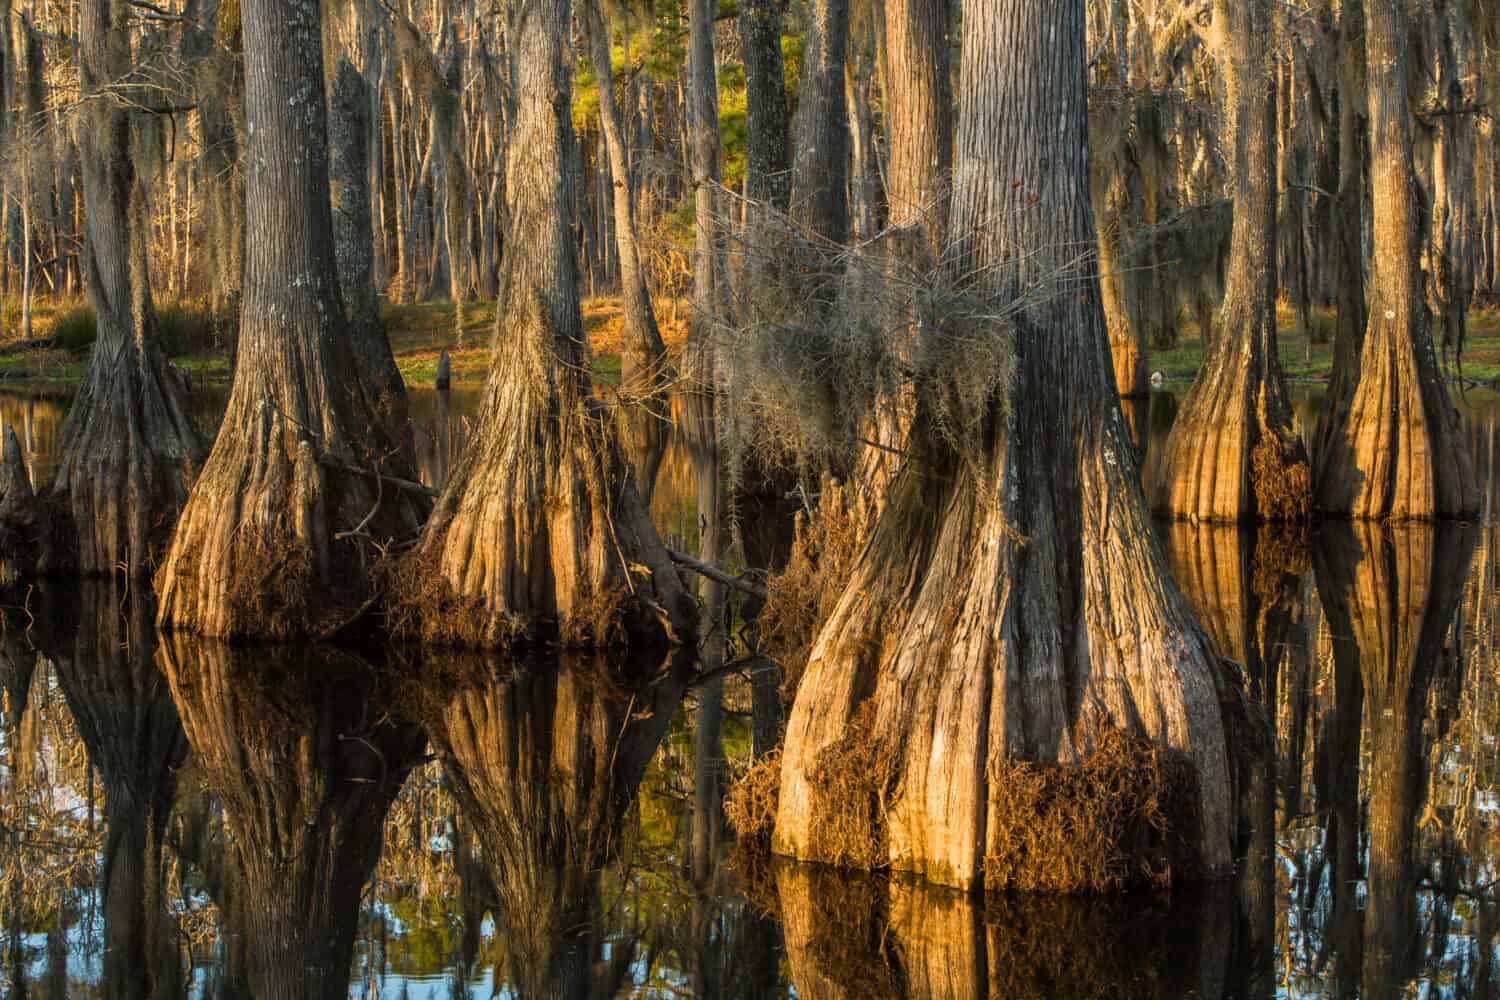 Swamp with bald-cypresses at the Sam Houston Jones State Park, Louisiana, USA